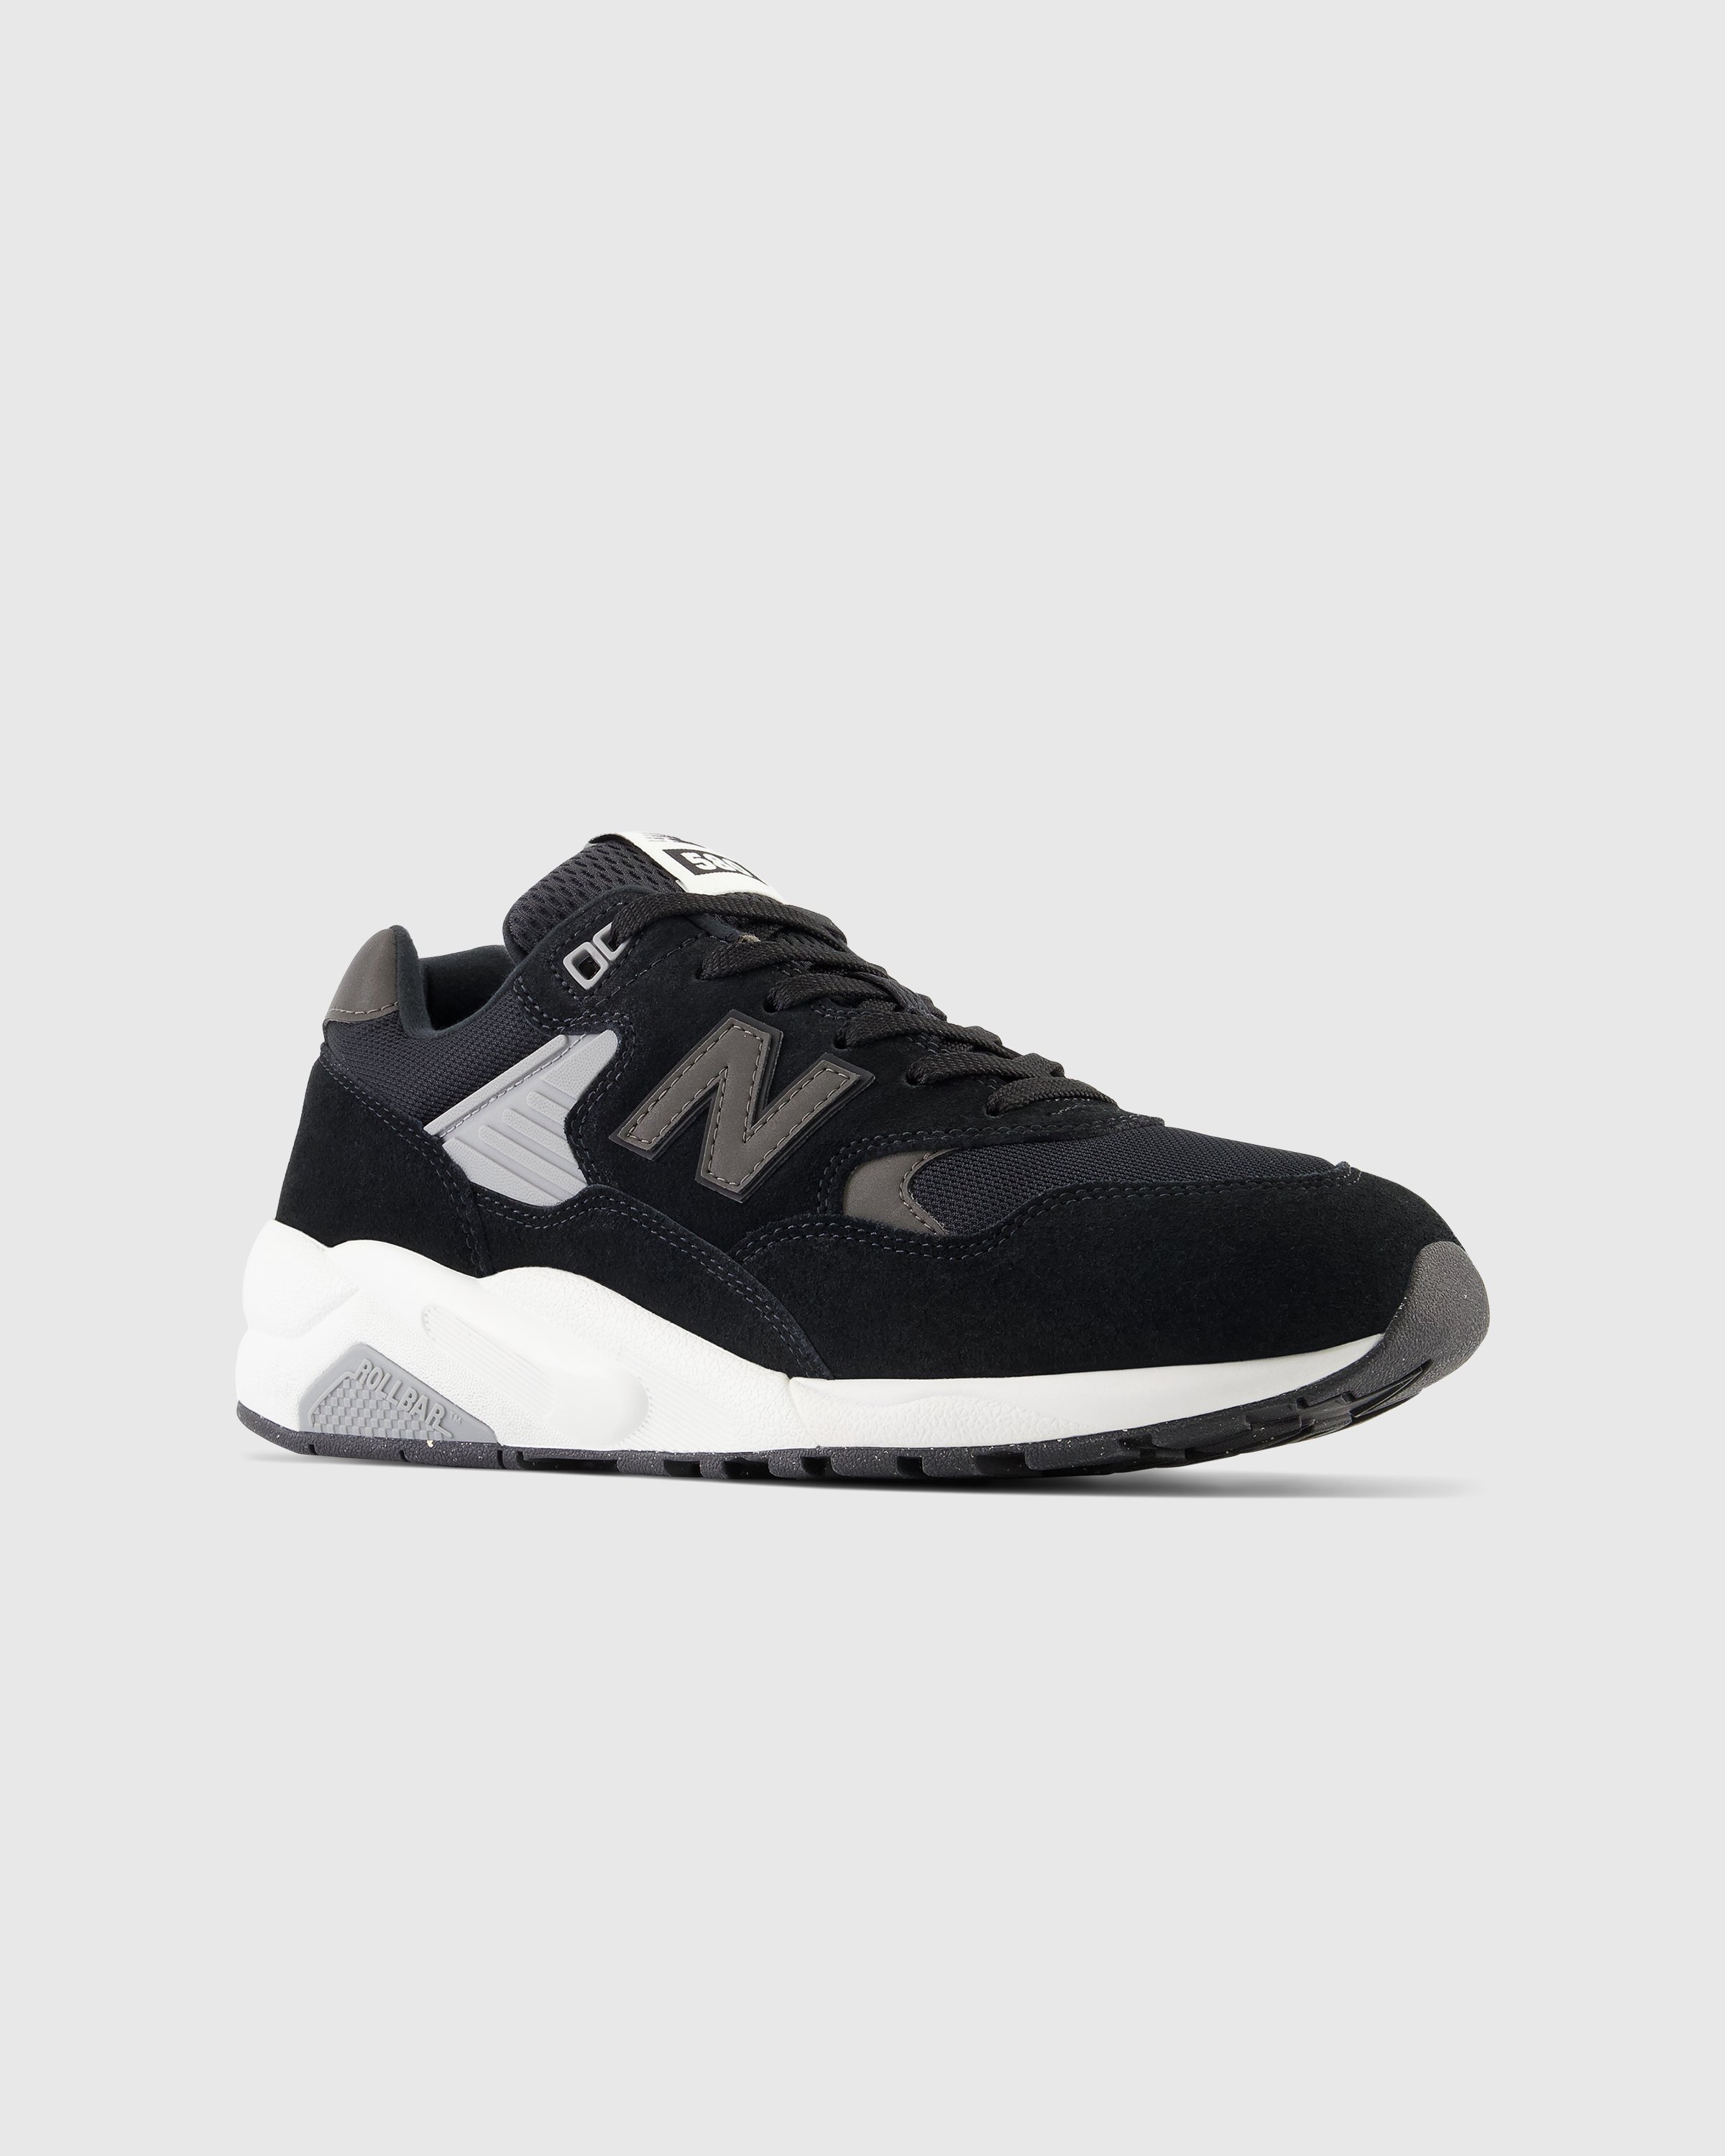 New Balance - 580 Black/Grey/White - Footwear - Black - Image 3